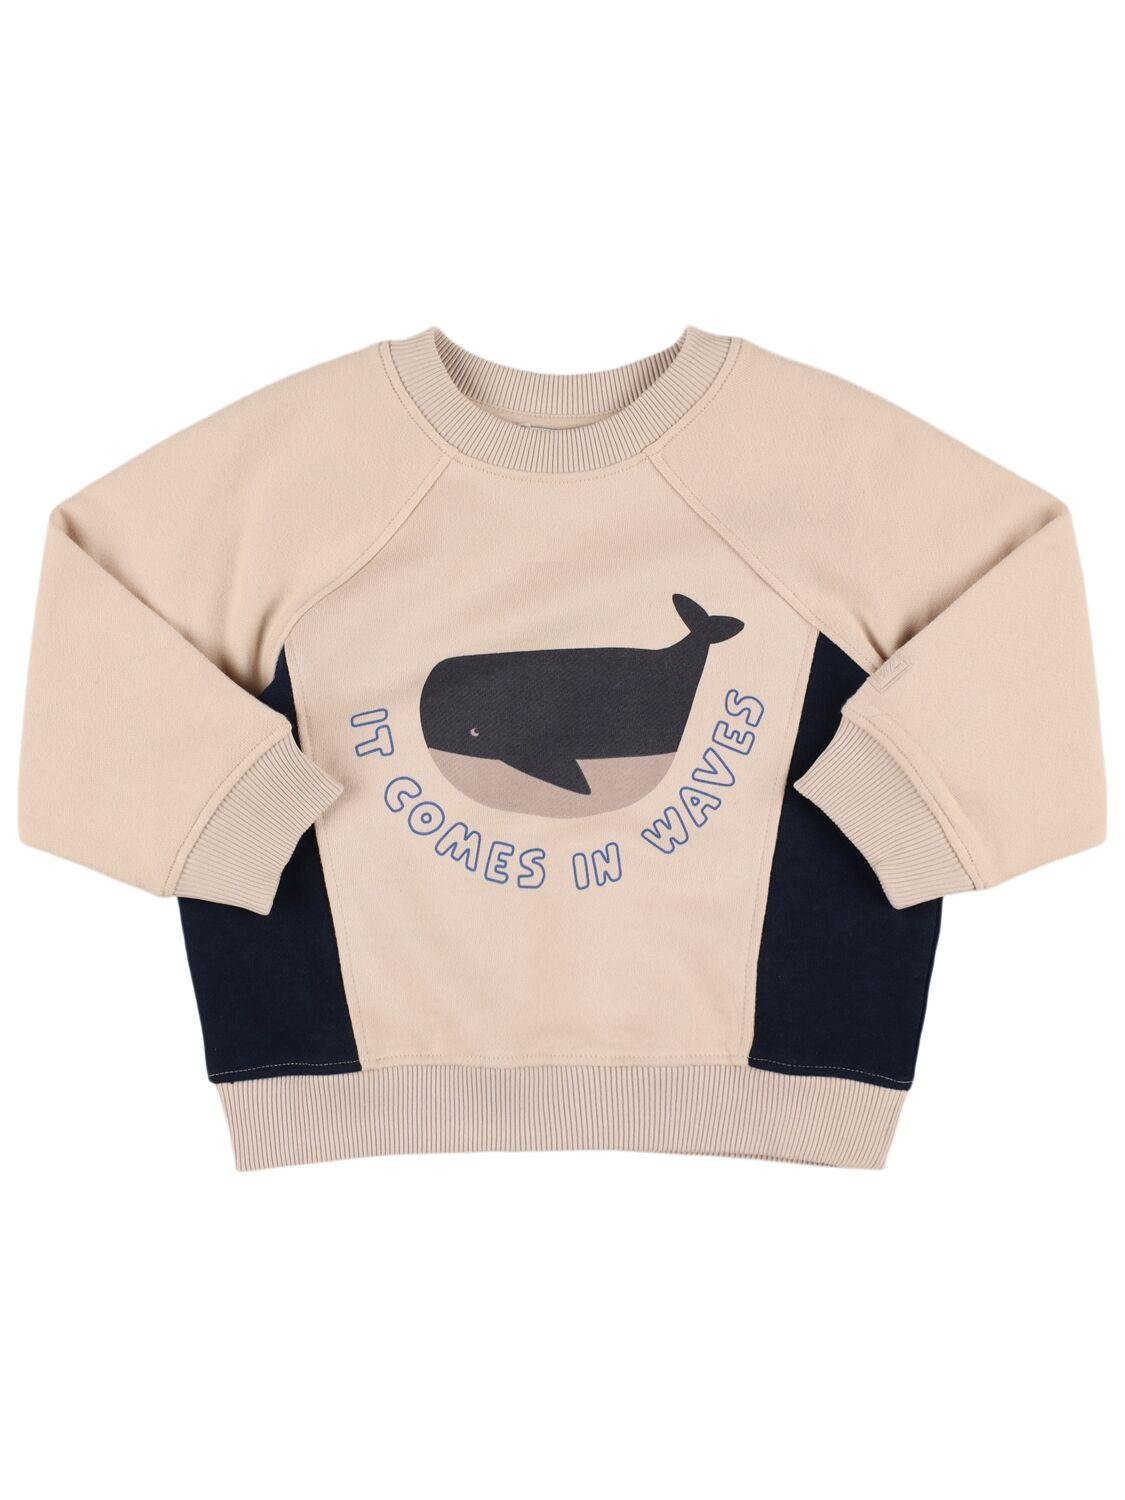 Oversize Printed Cotton Sweatshirt by LIEWOOD